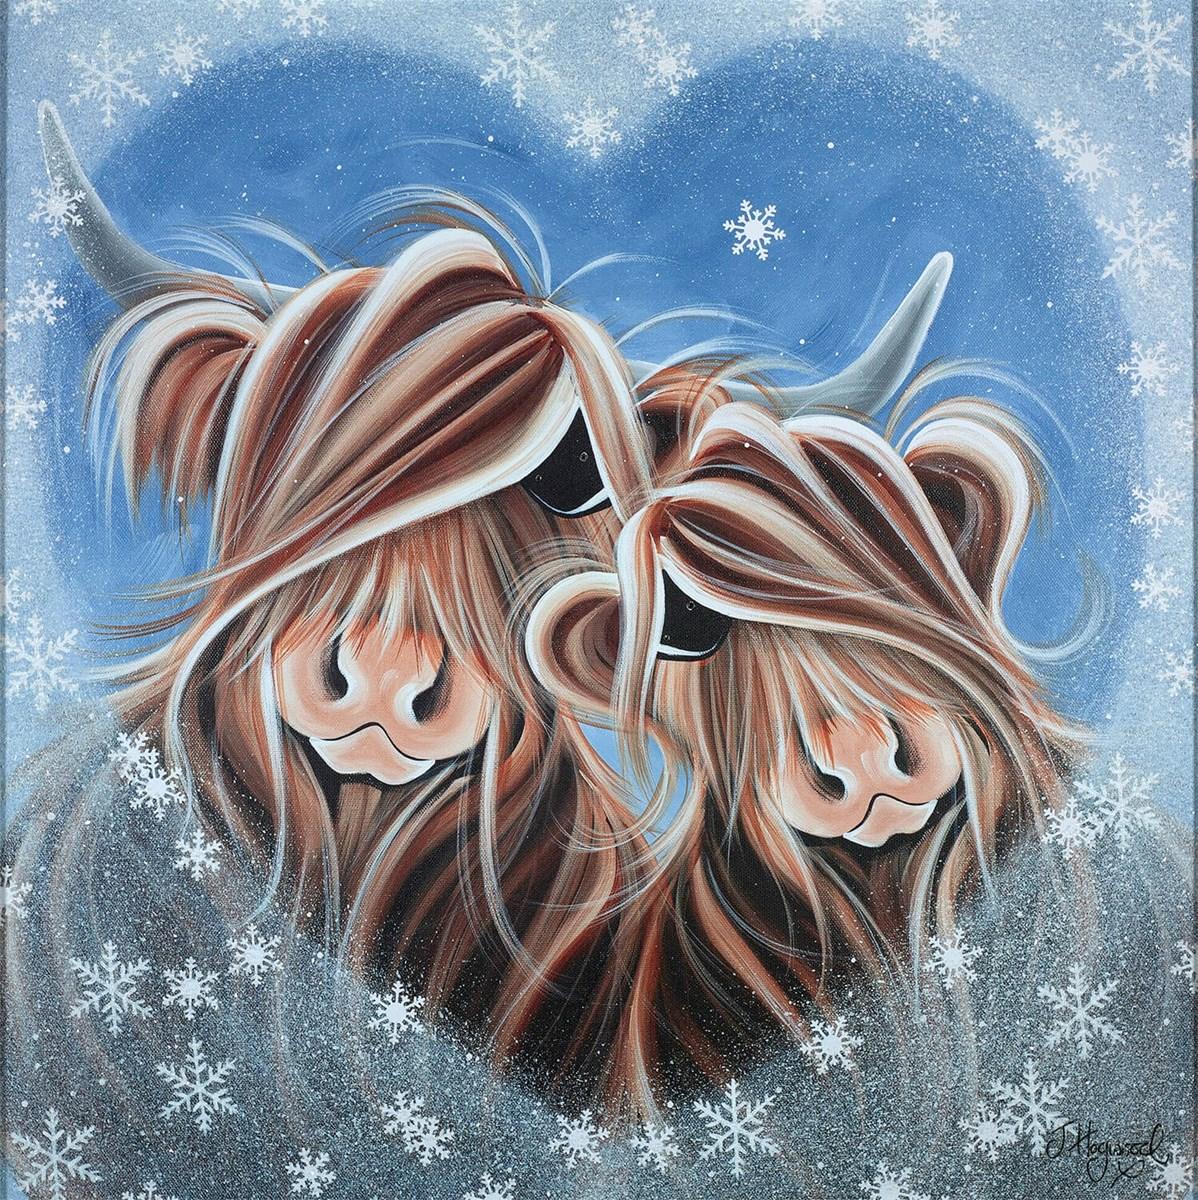 Baby It's Cold Outside by Jennifer Hogwood - canvas art print LHOJ075